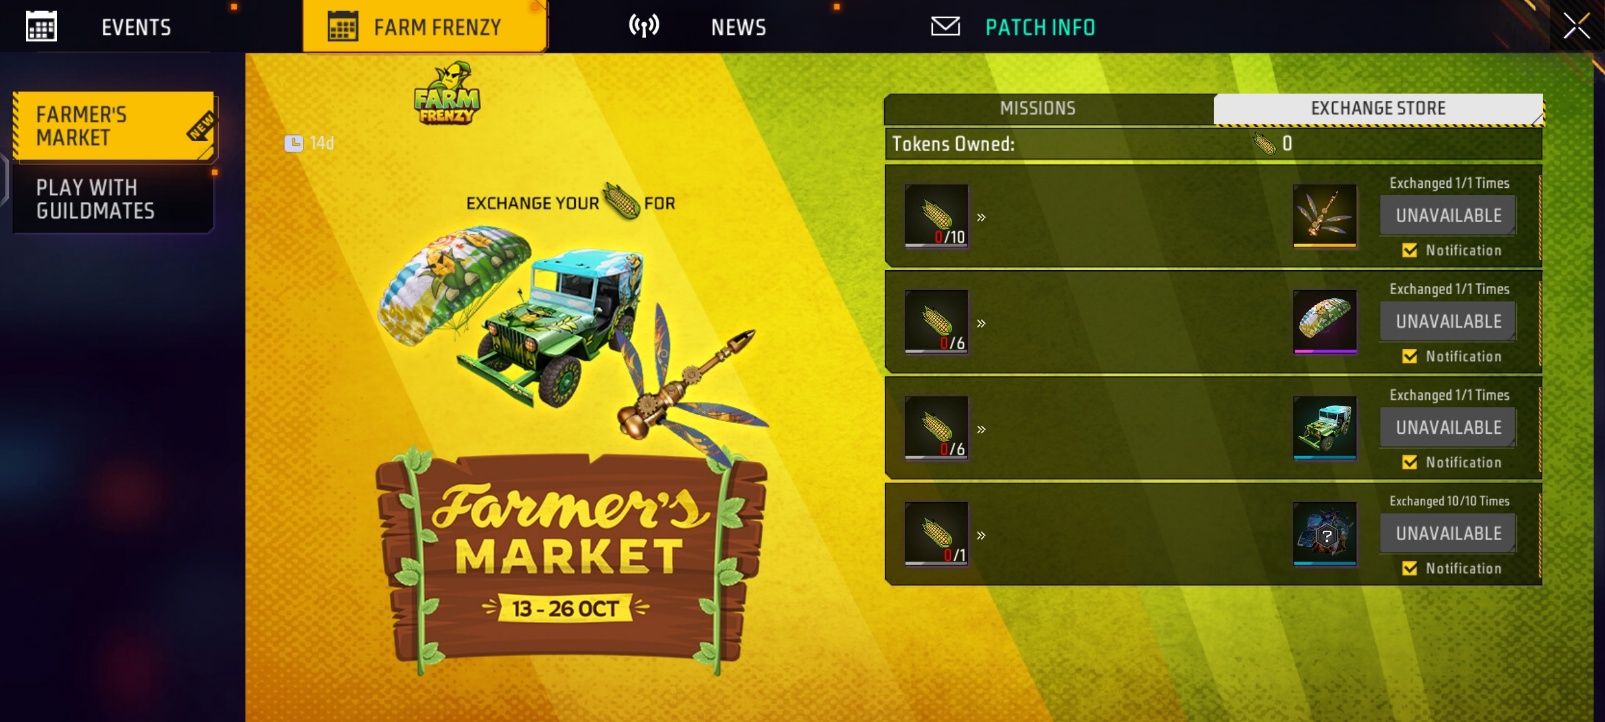 New Event In Free Fire Max: The Farmer’s Market